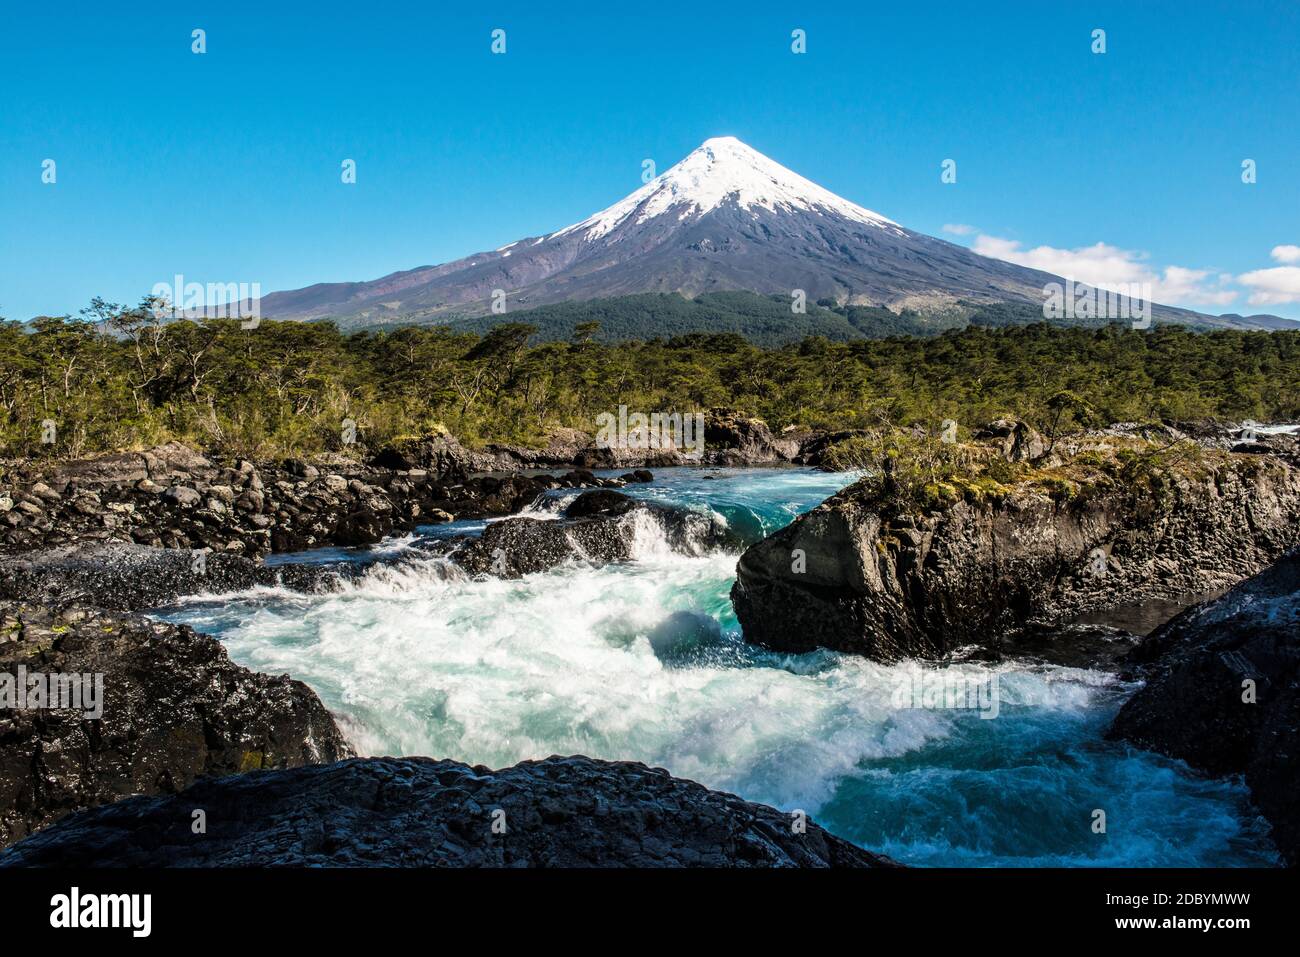 Saltos de Petrohue with the Osorno volcano, Chile Stock Photo